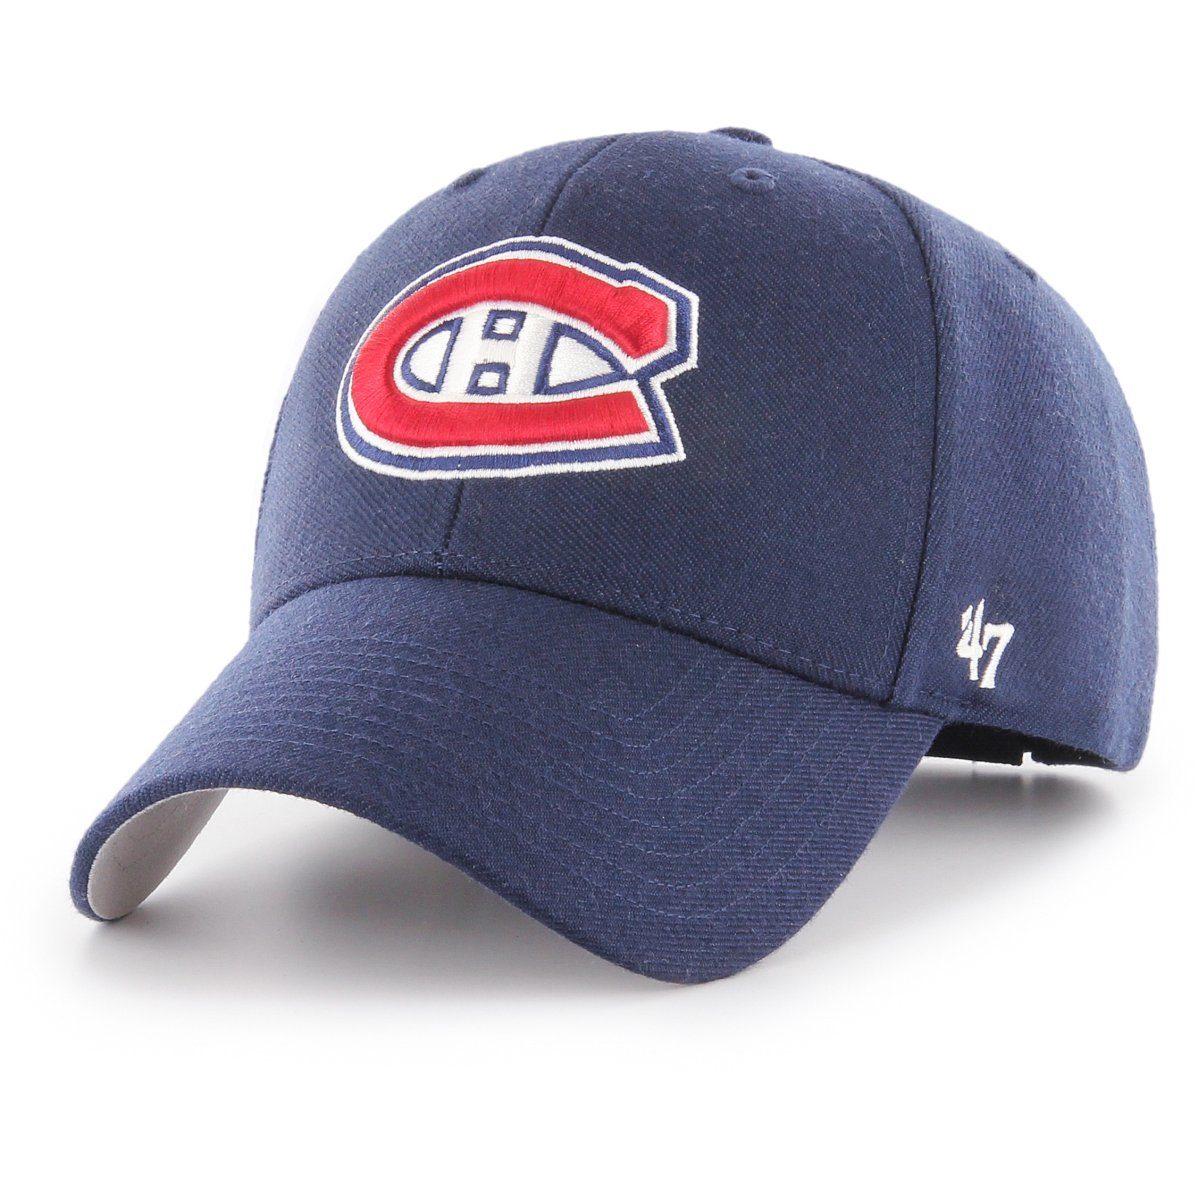 '47 Brand Baseball Cap NHL Montreal Canadians | Baseball Caps